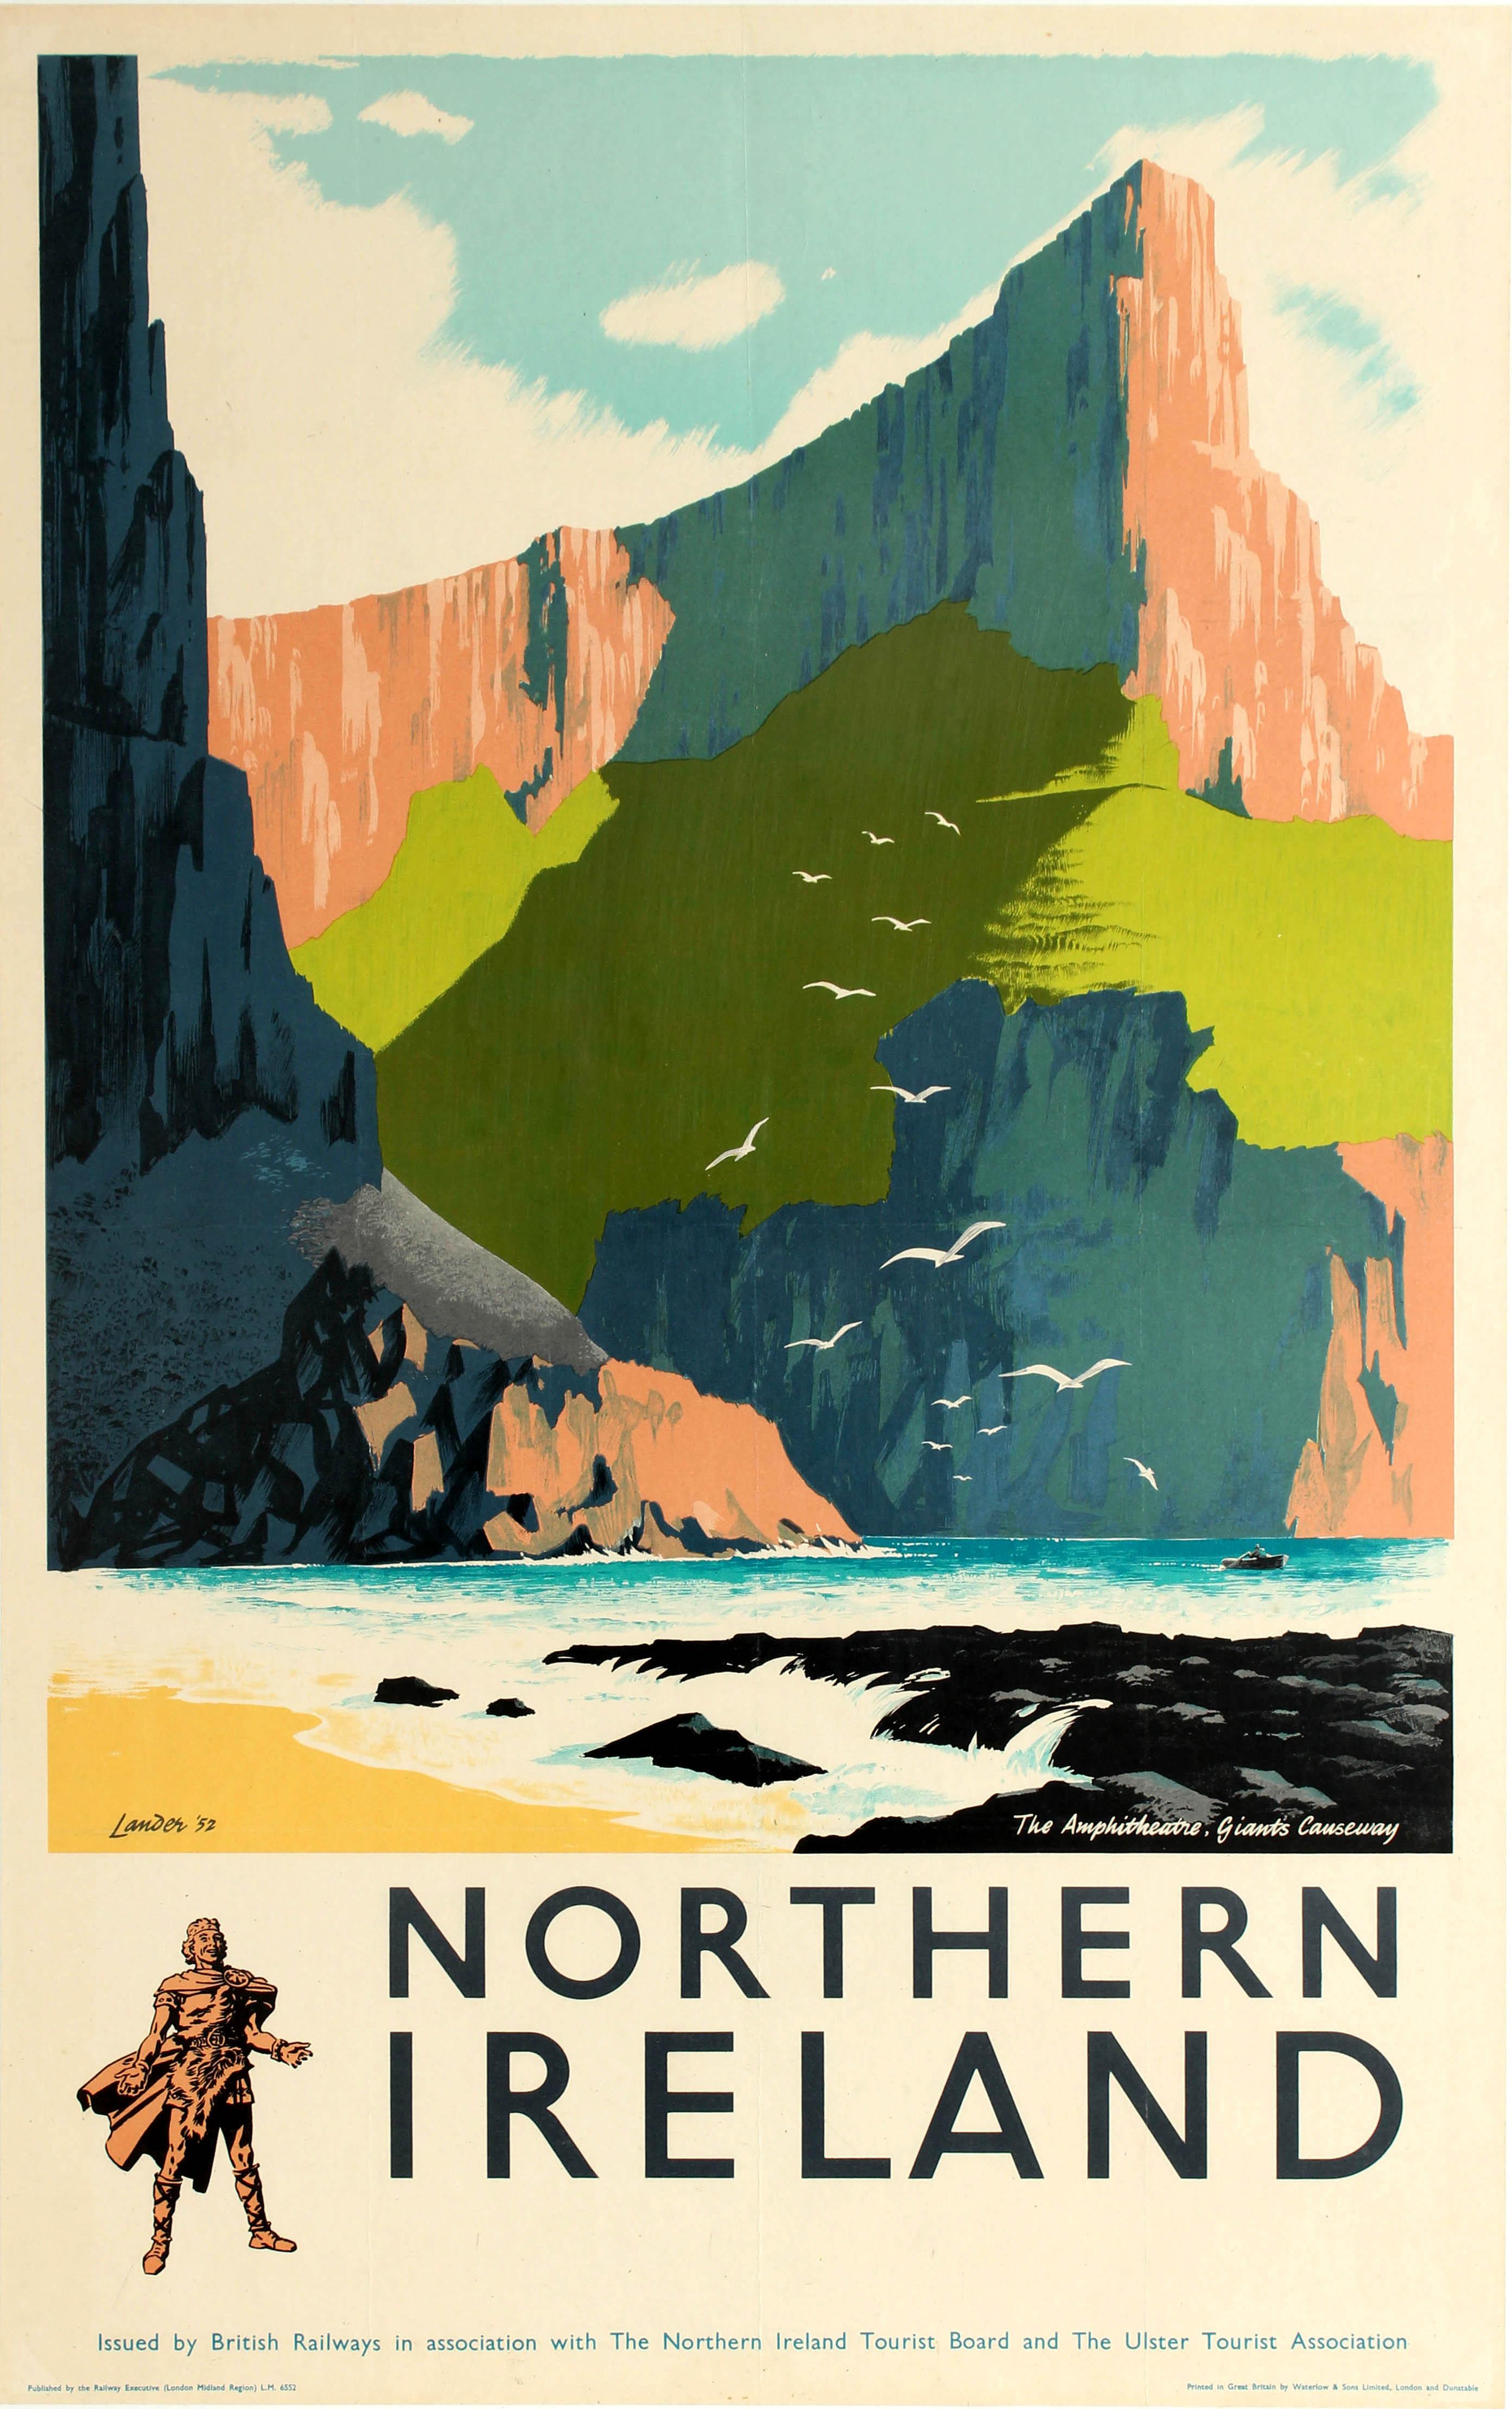 Reginald Lander Print - Original Vintage Travel Poster Northern Ireland Giant's Causeway Amphitheatre